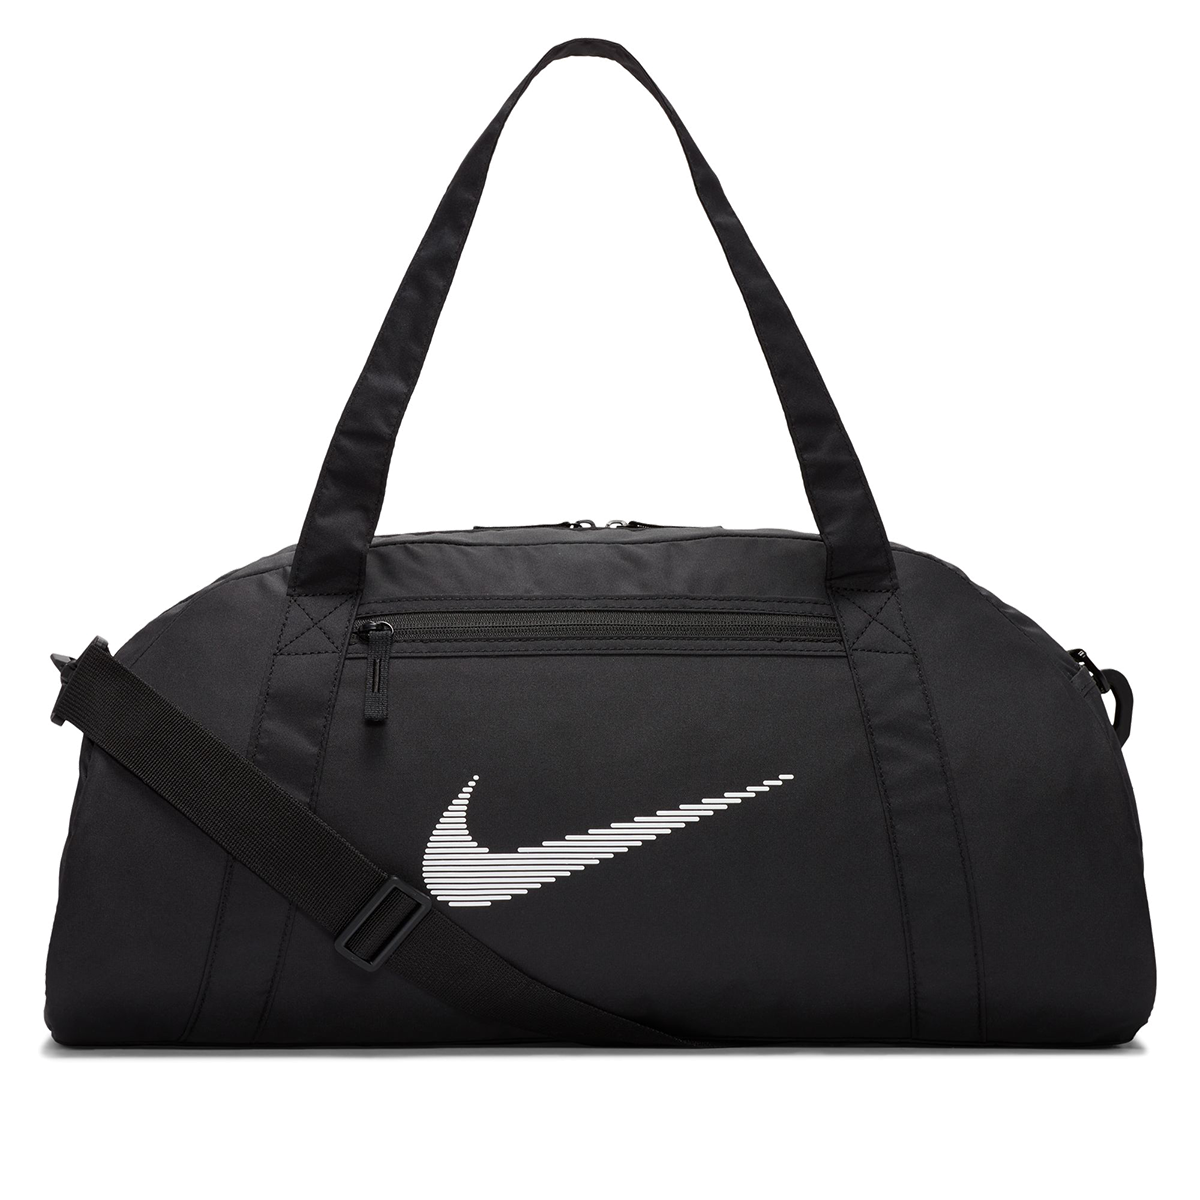 Nike Unisex Gym Club Duffle Bag in Black/White   Fit2Run